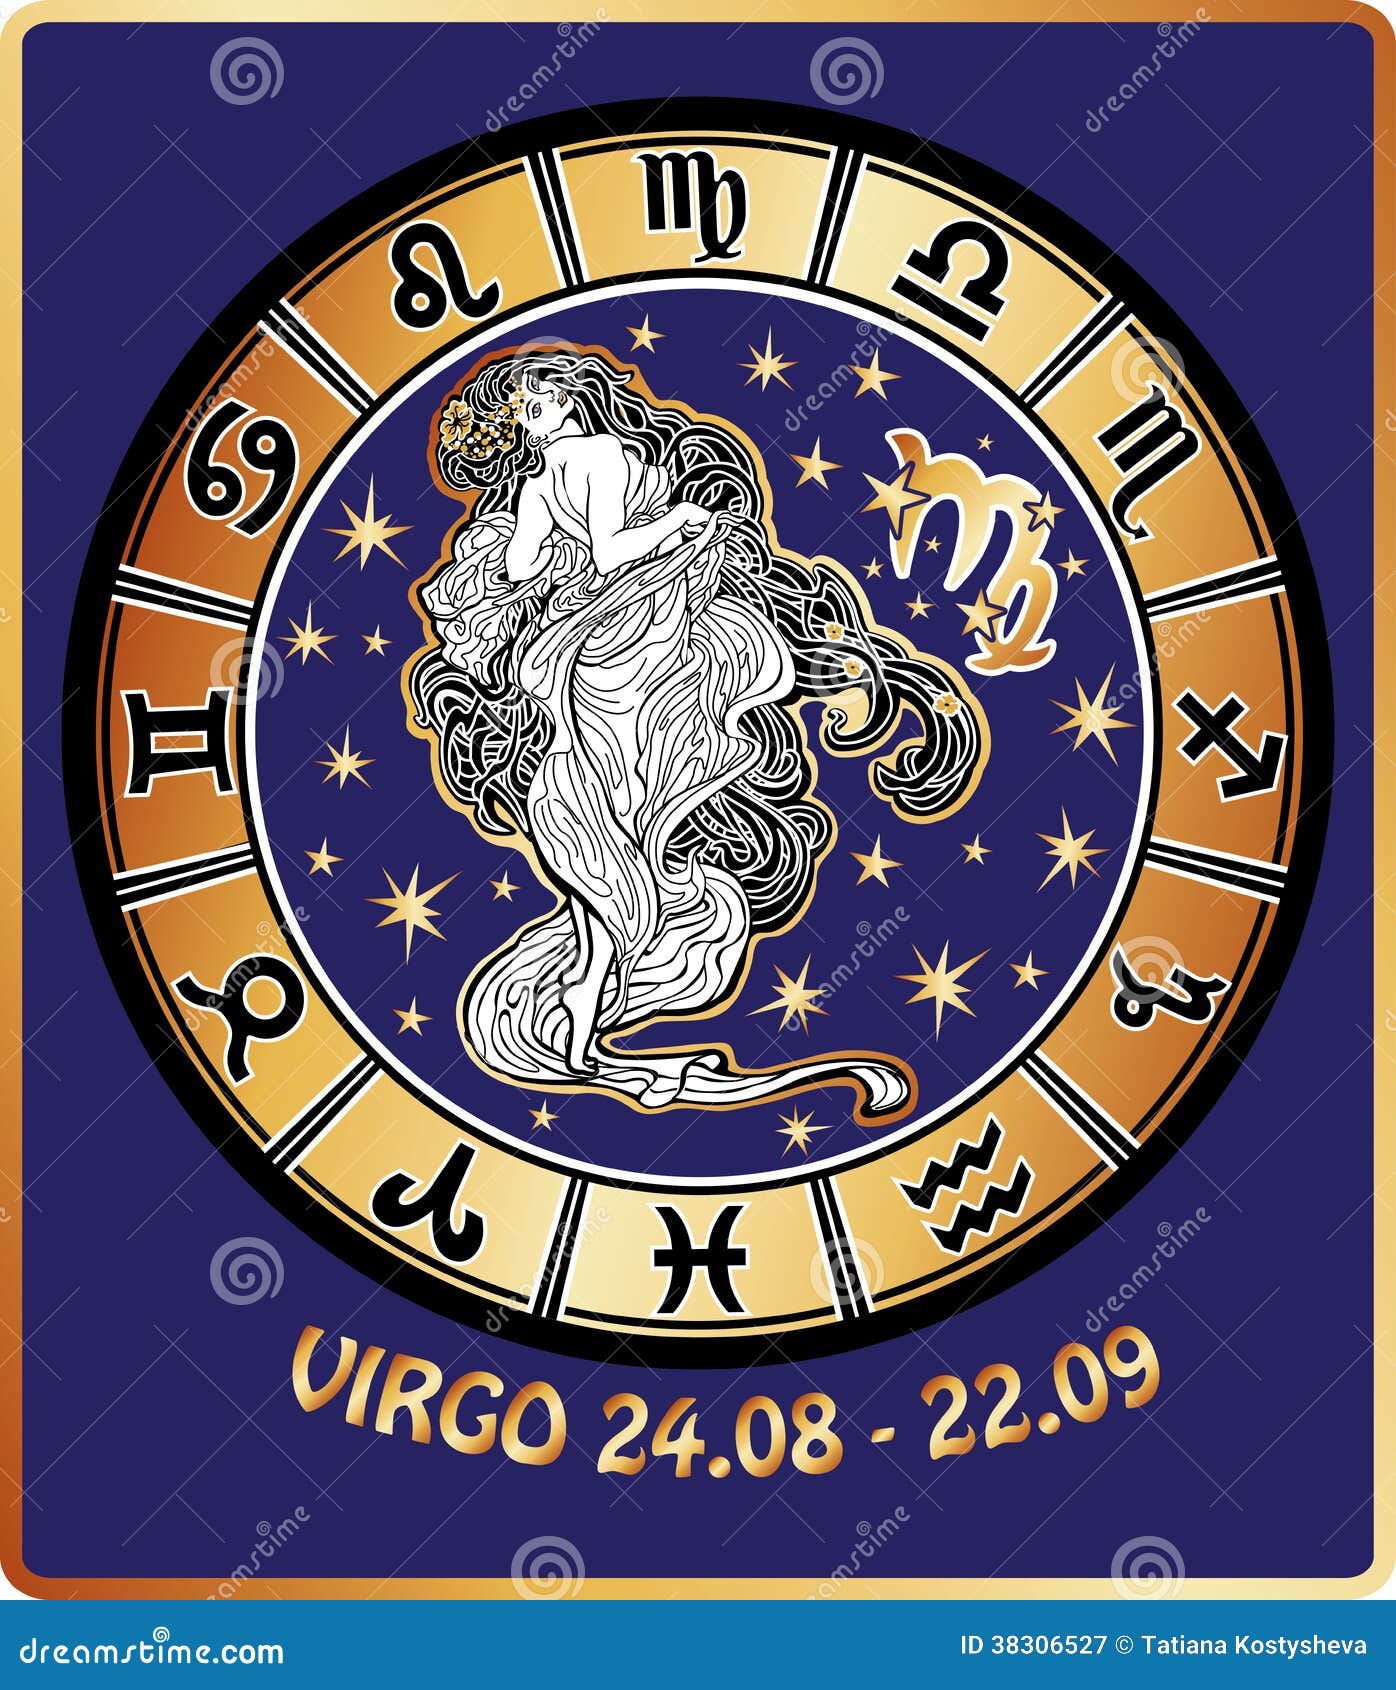 Год лошади девы. Virgo.Horoscope знак зодиака. Знаки зодиака "Дева". Зодиакальный круг Дева. Дева знак зодиака символ.